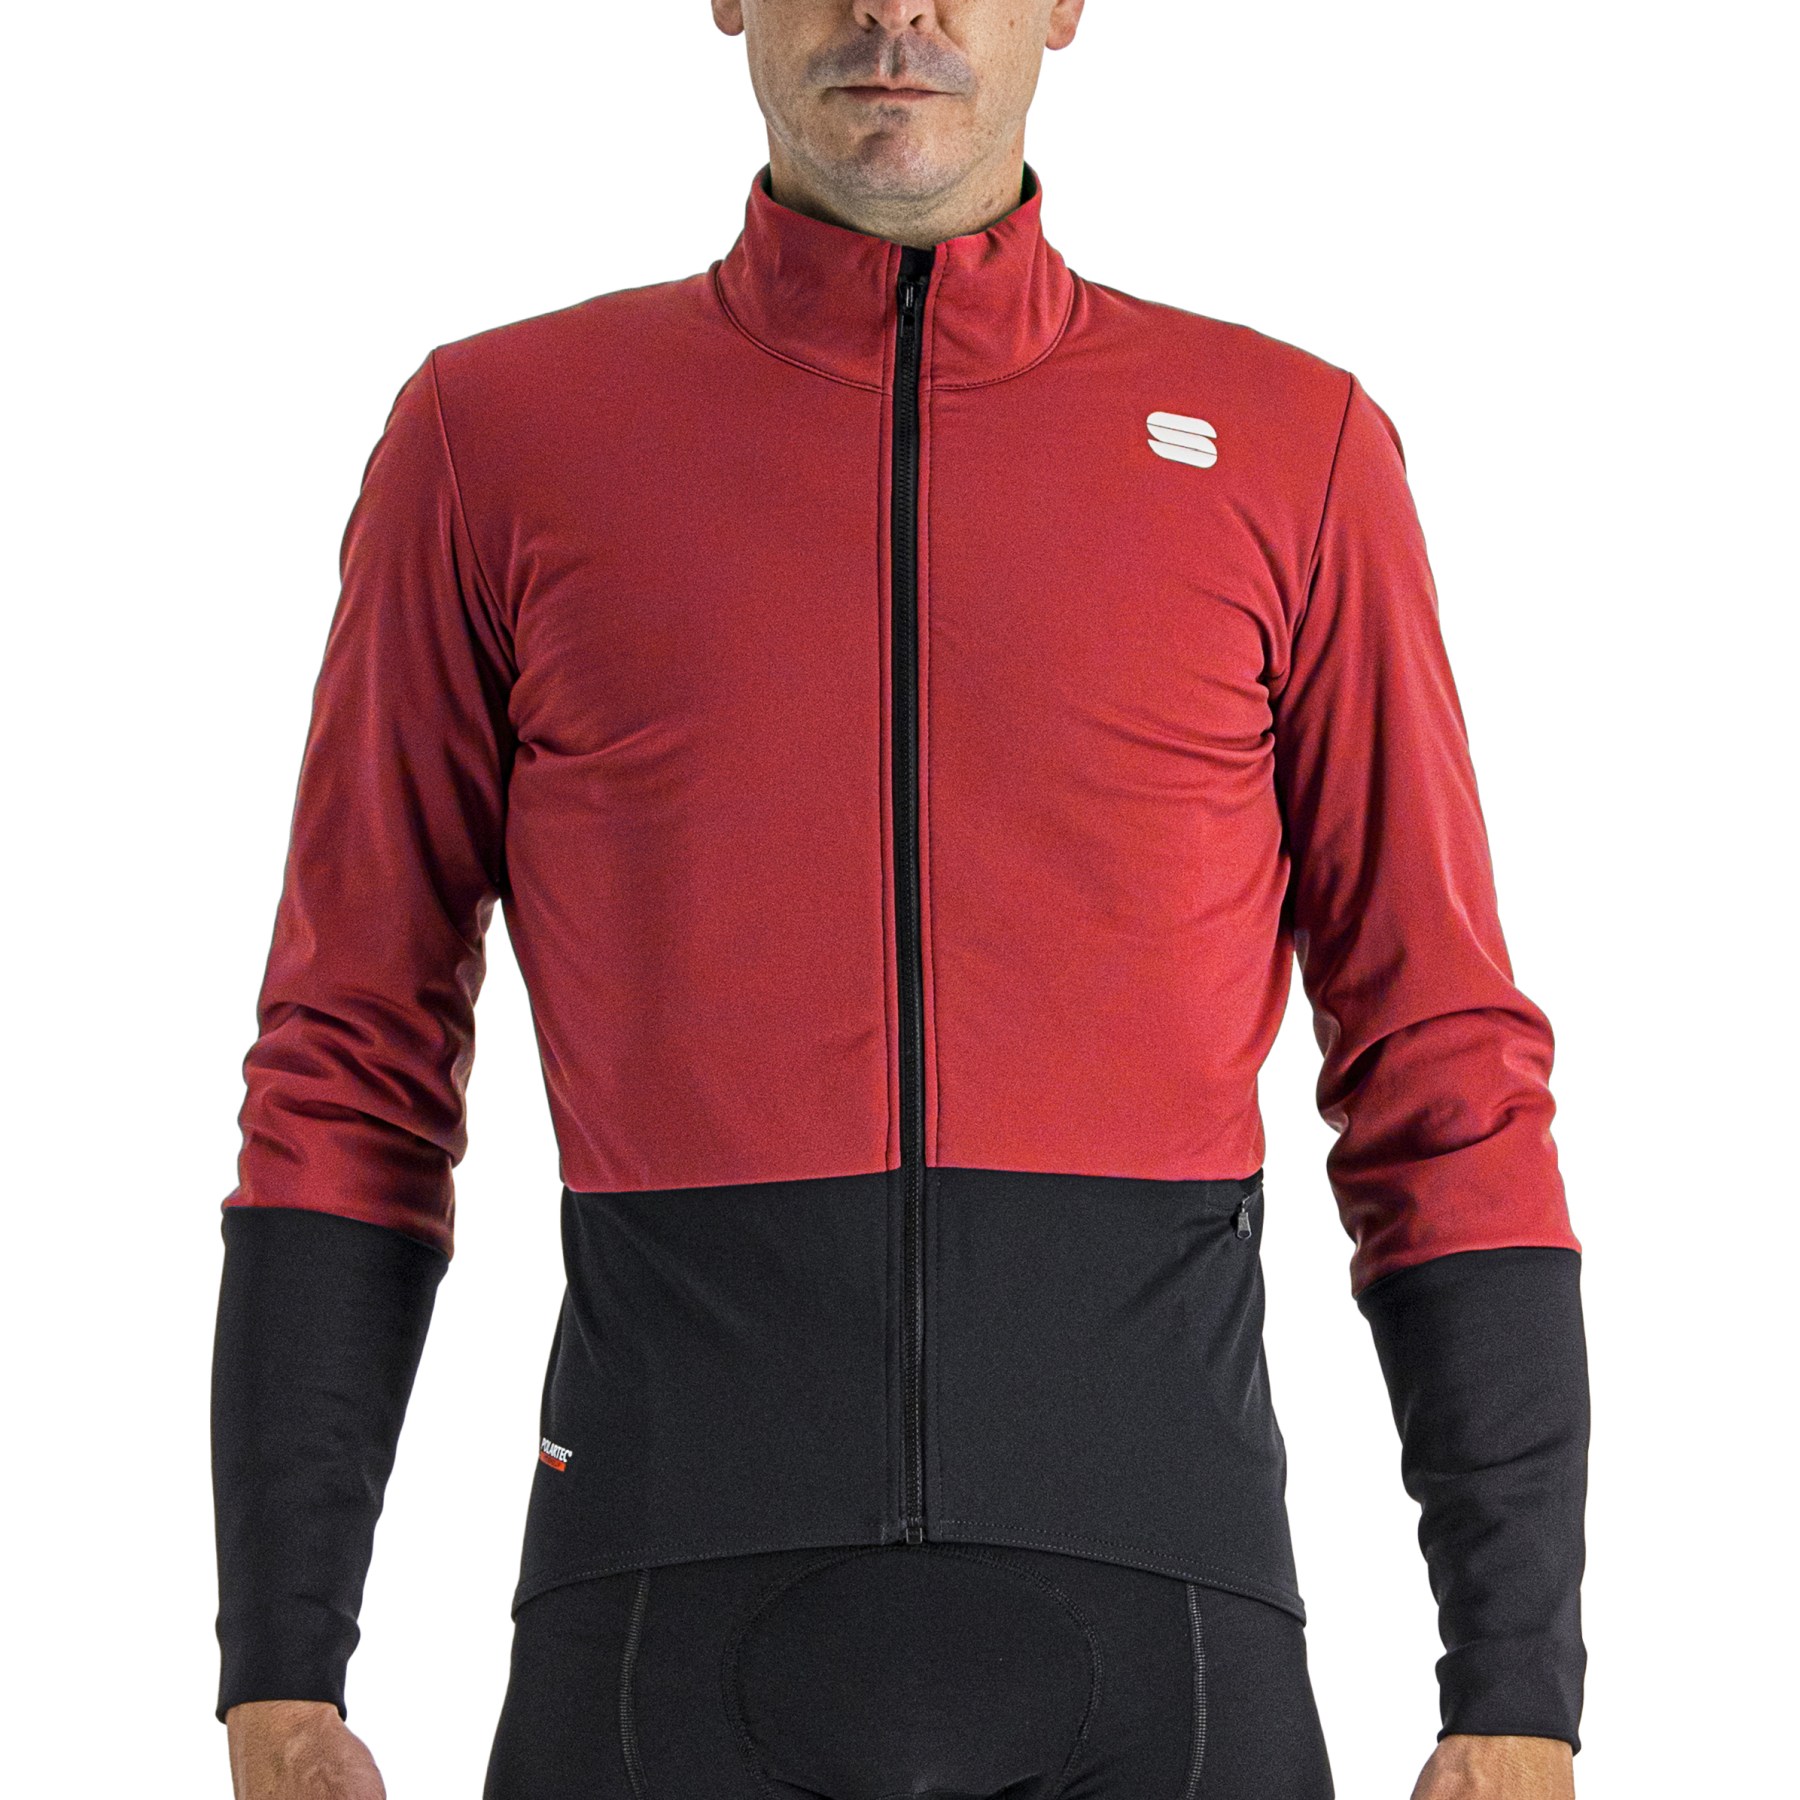 Produktbild von Sportful Total Comfort Fahrradjacke - 622 Red Rumba/Black